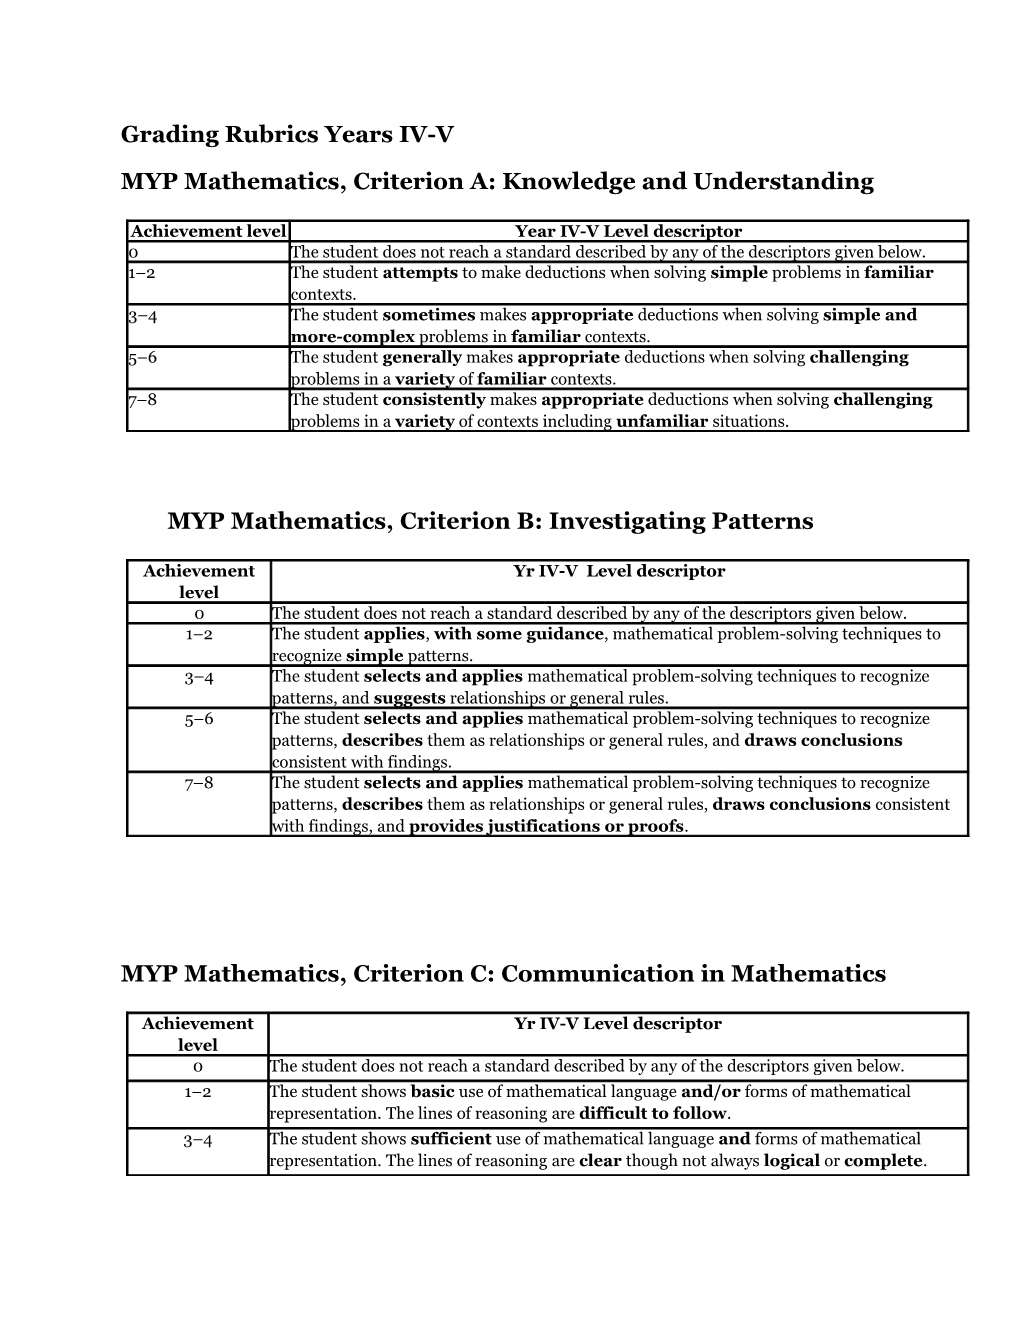 MYP Mathematics, Criterion A: Knowledge and Understanding